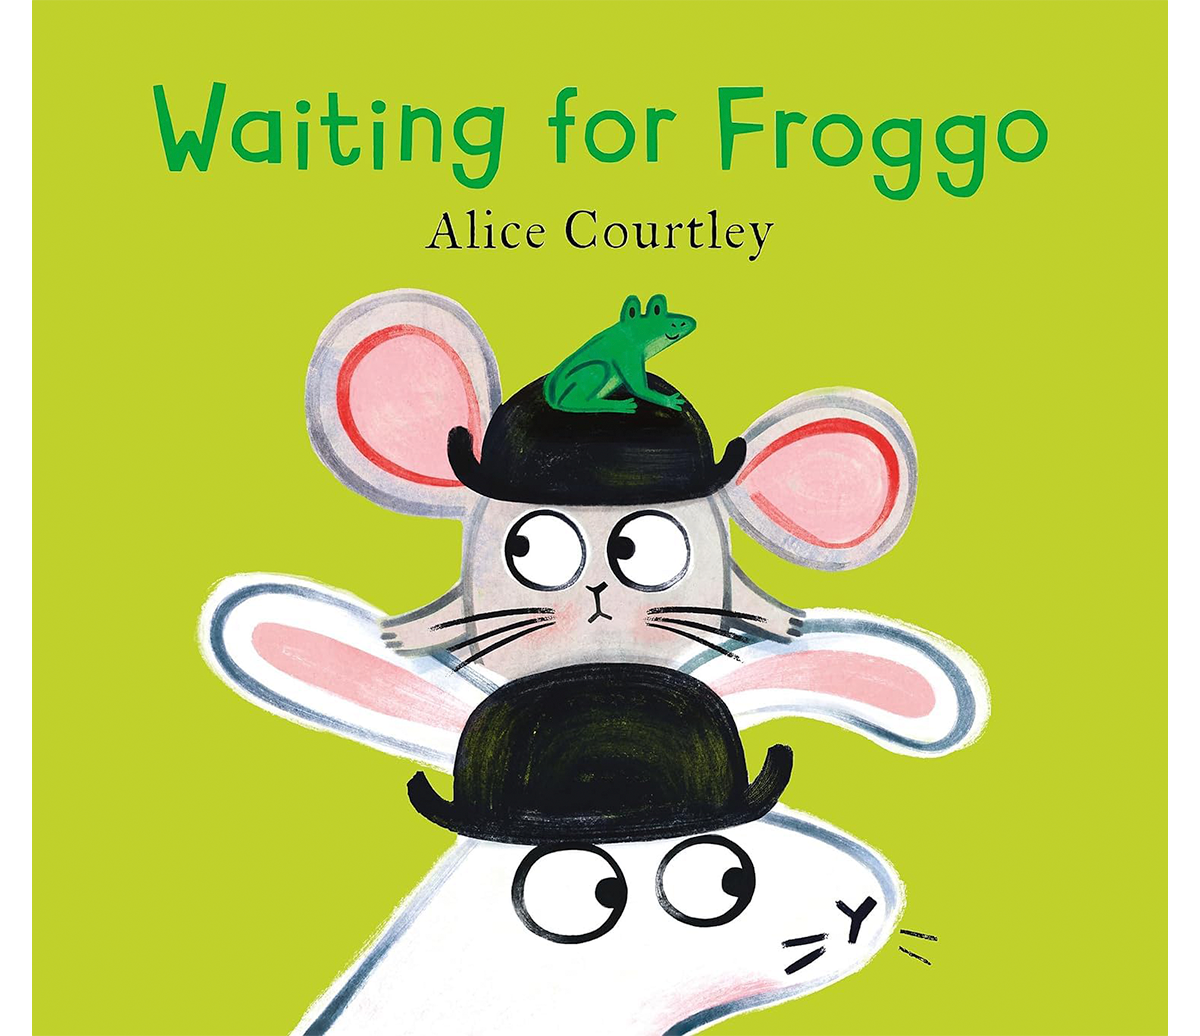 alice-courtley-froggo-1.png